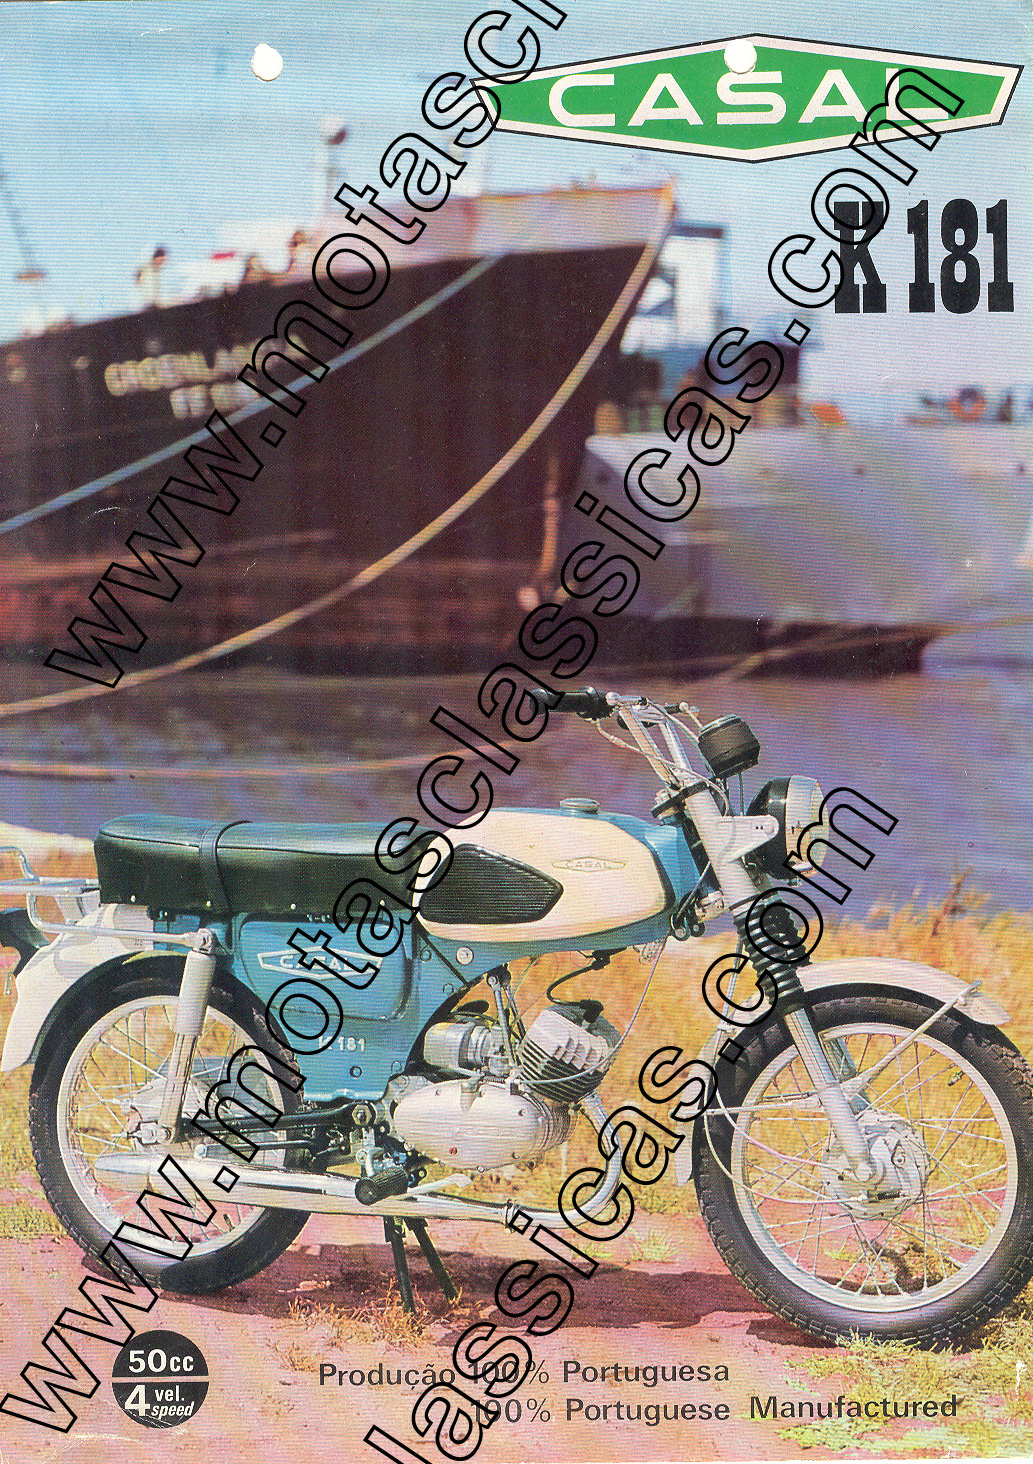 Par de punhos motorizada modelo IV - Sibanel - Since 1980